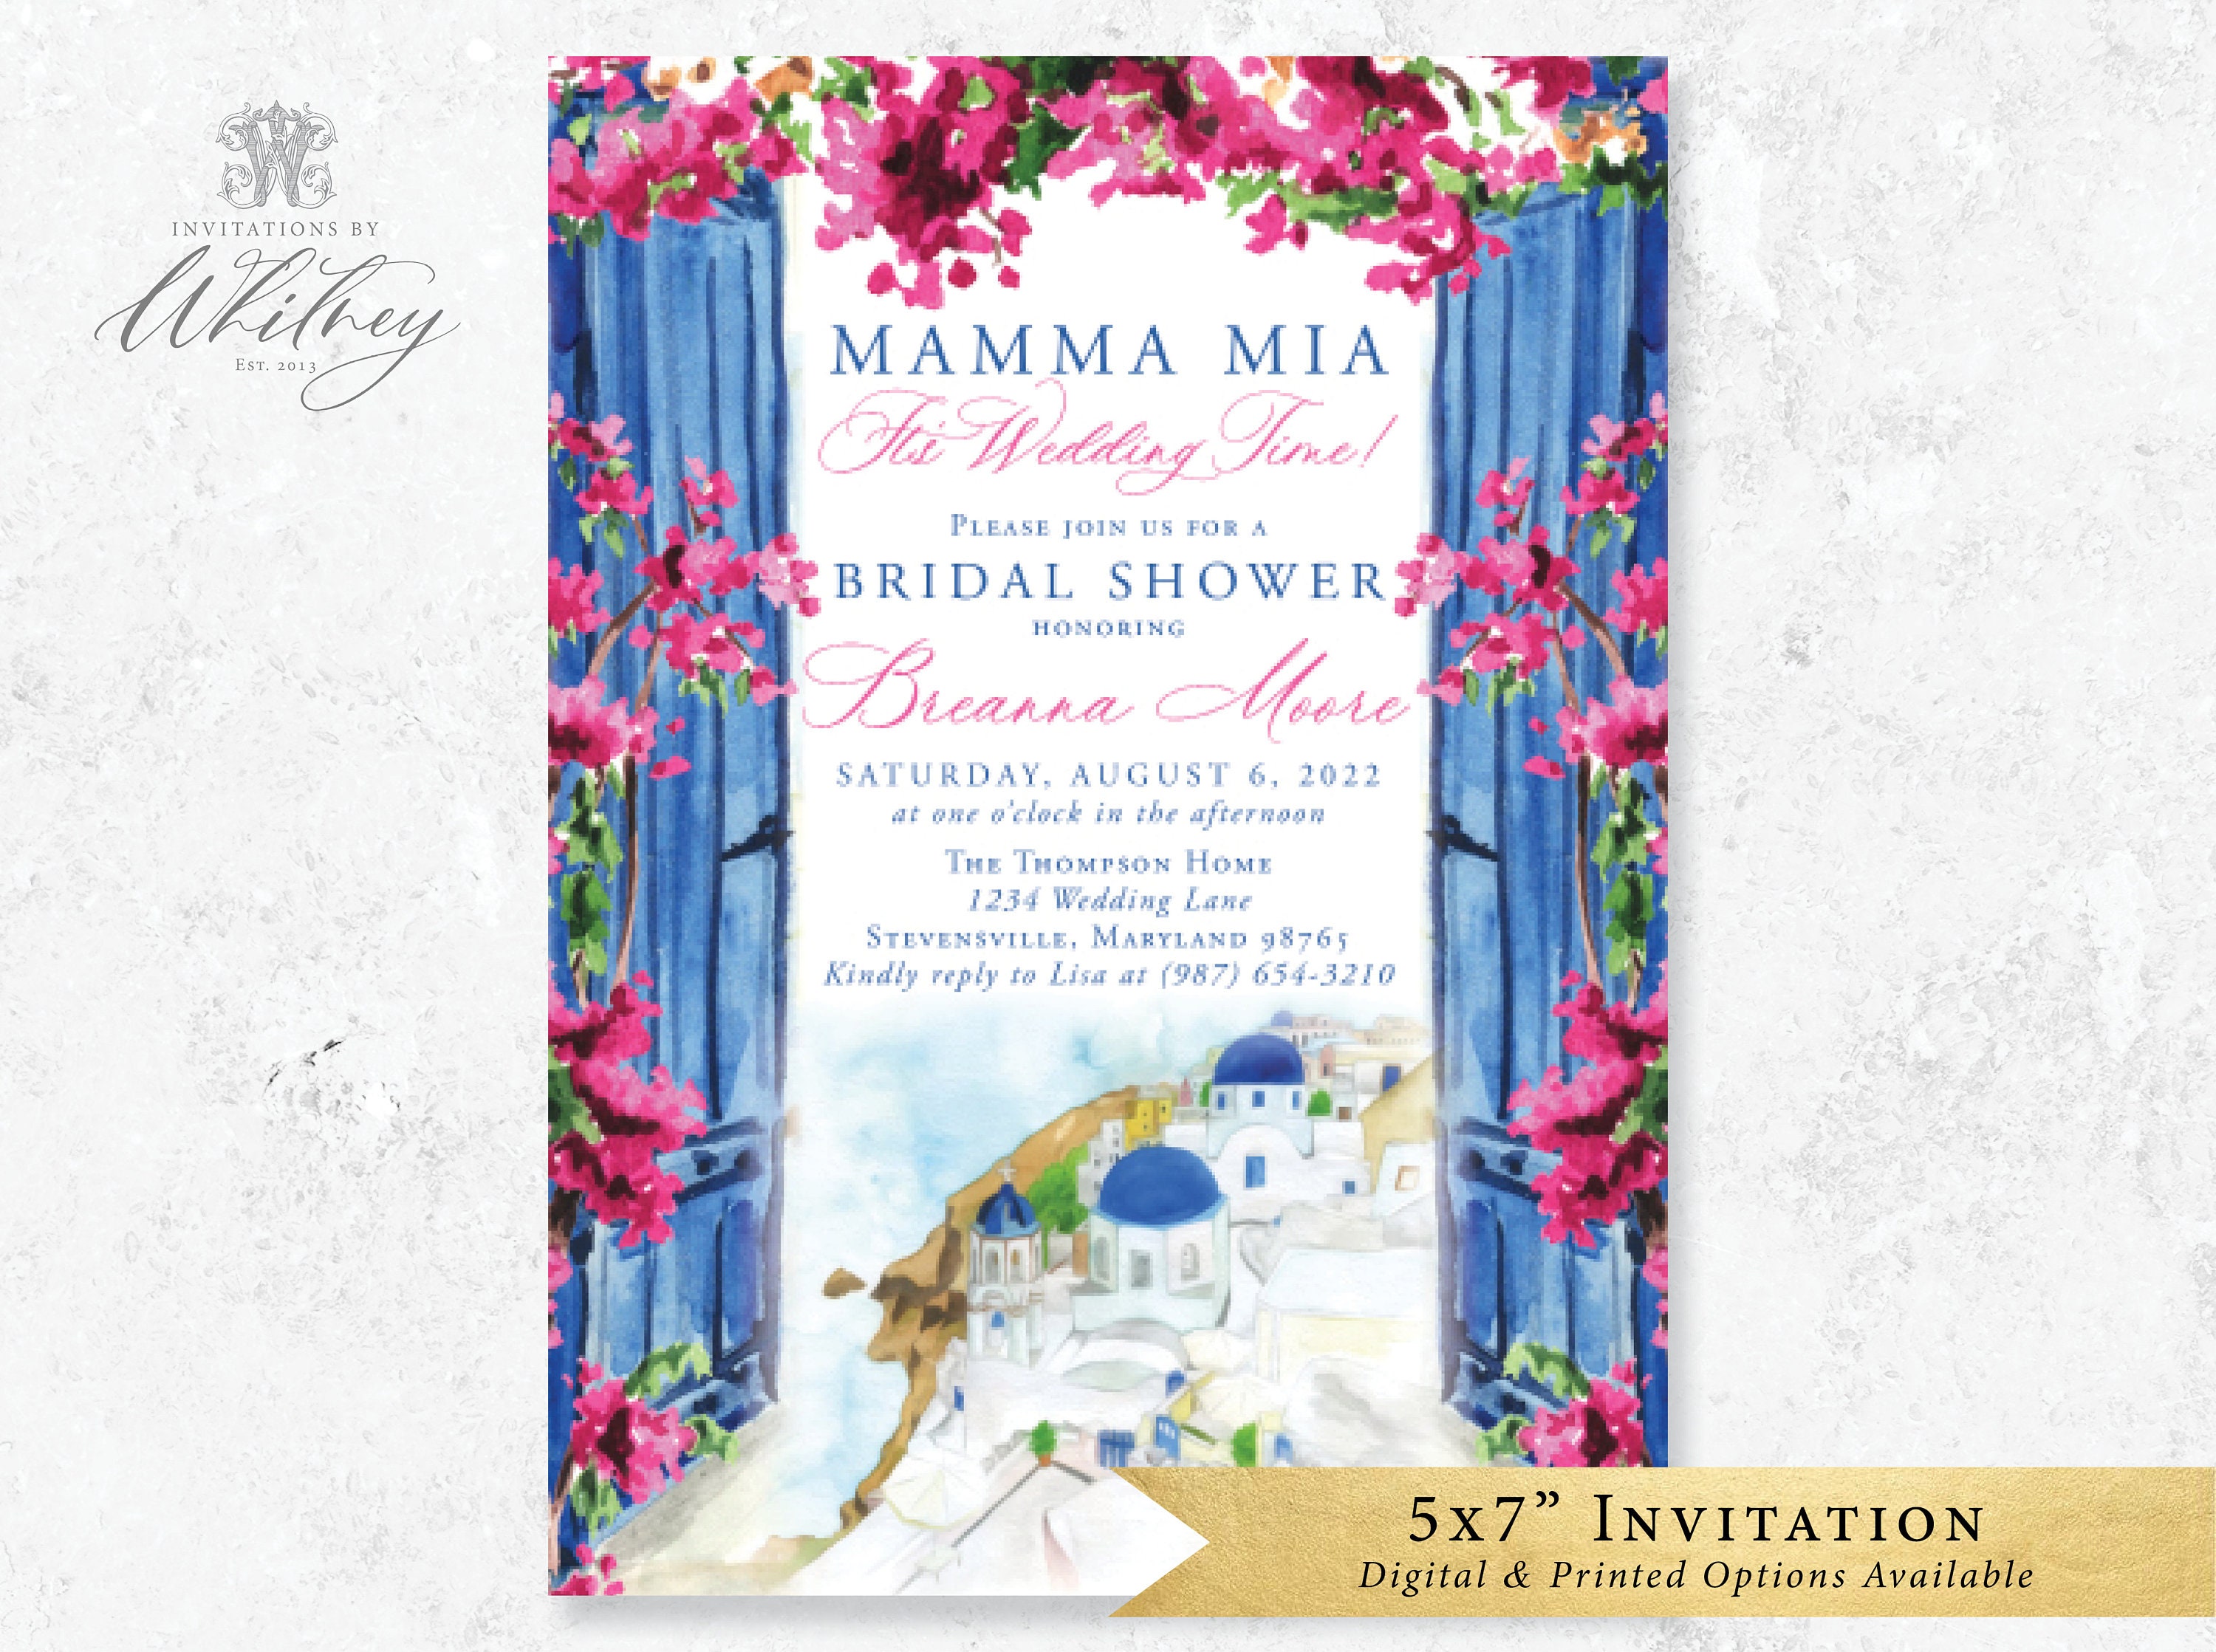 My Mamma Mia Themed Bridal Shower - Meg Monde - Lifestyle